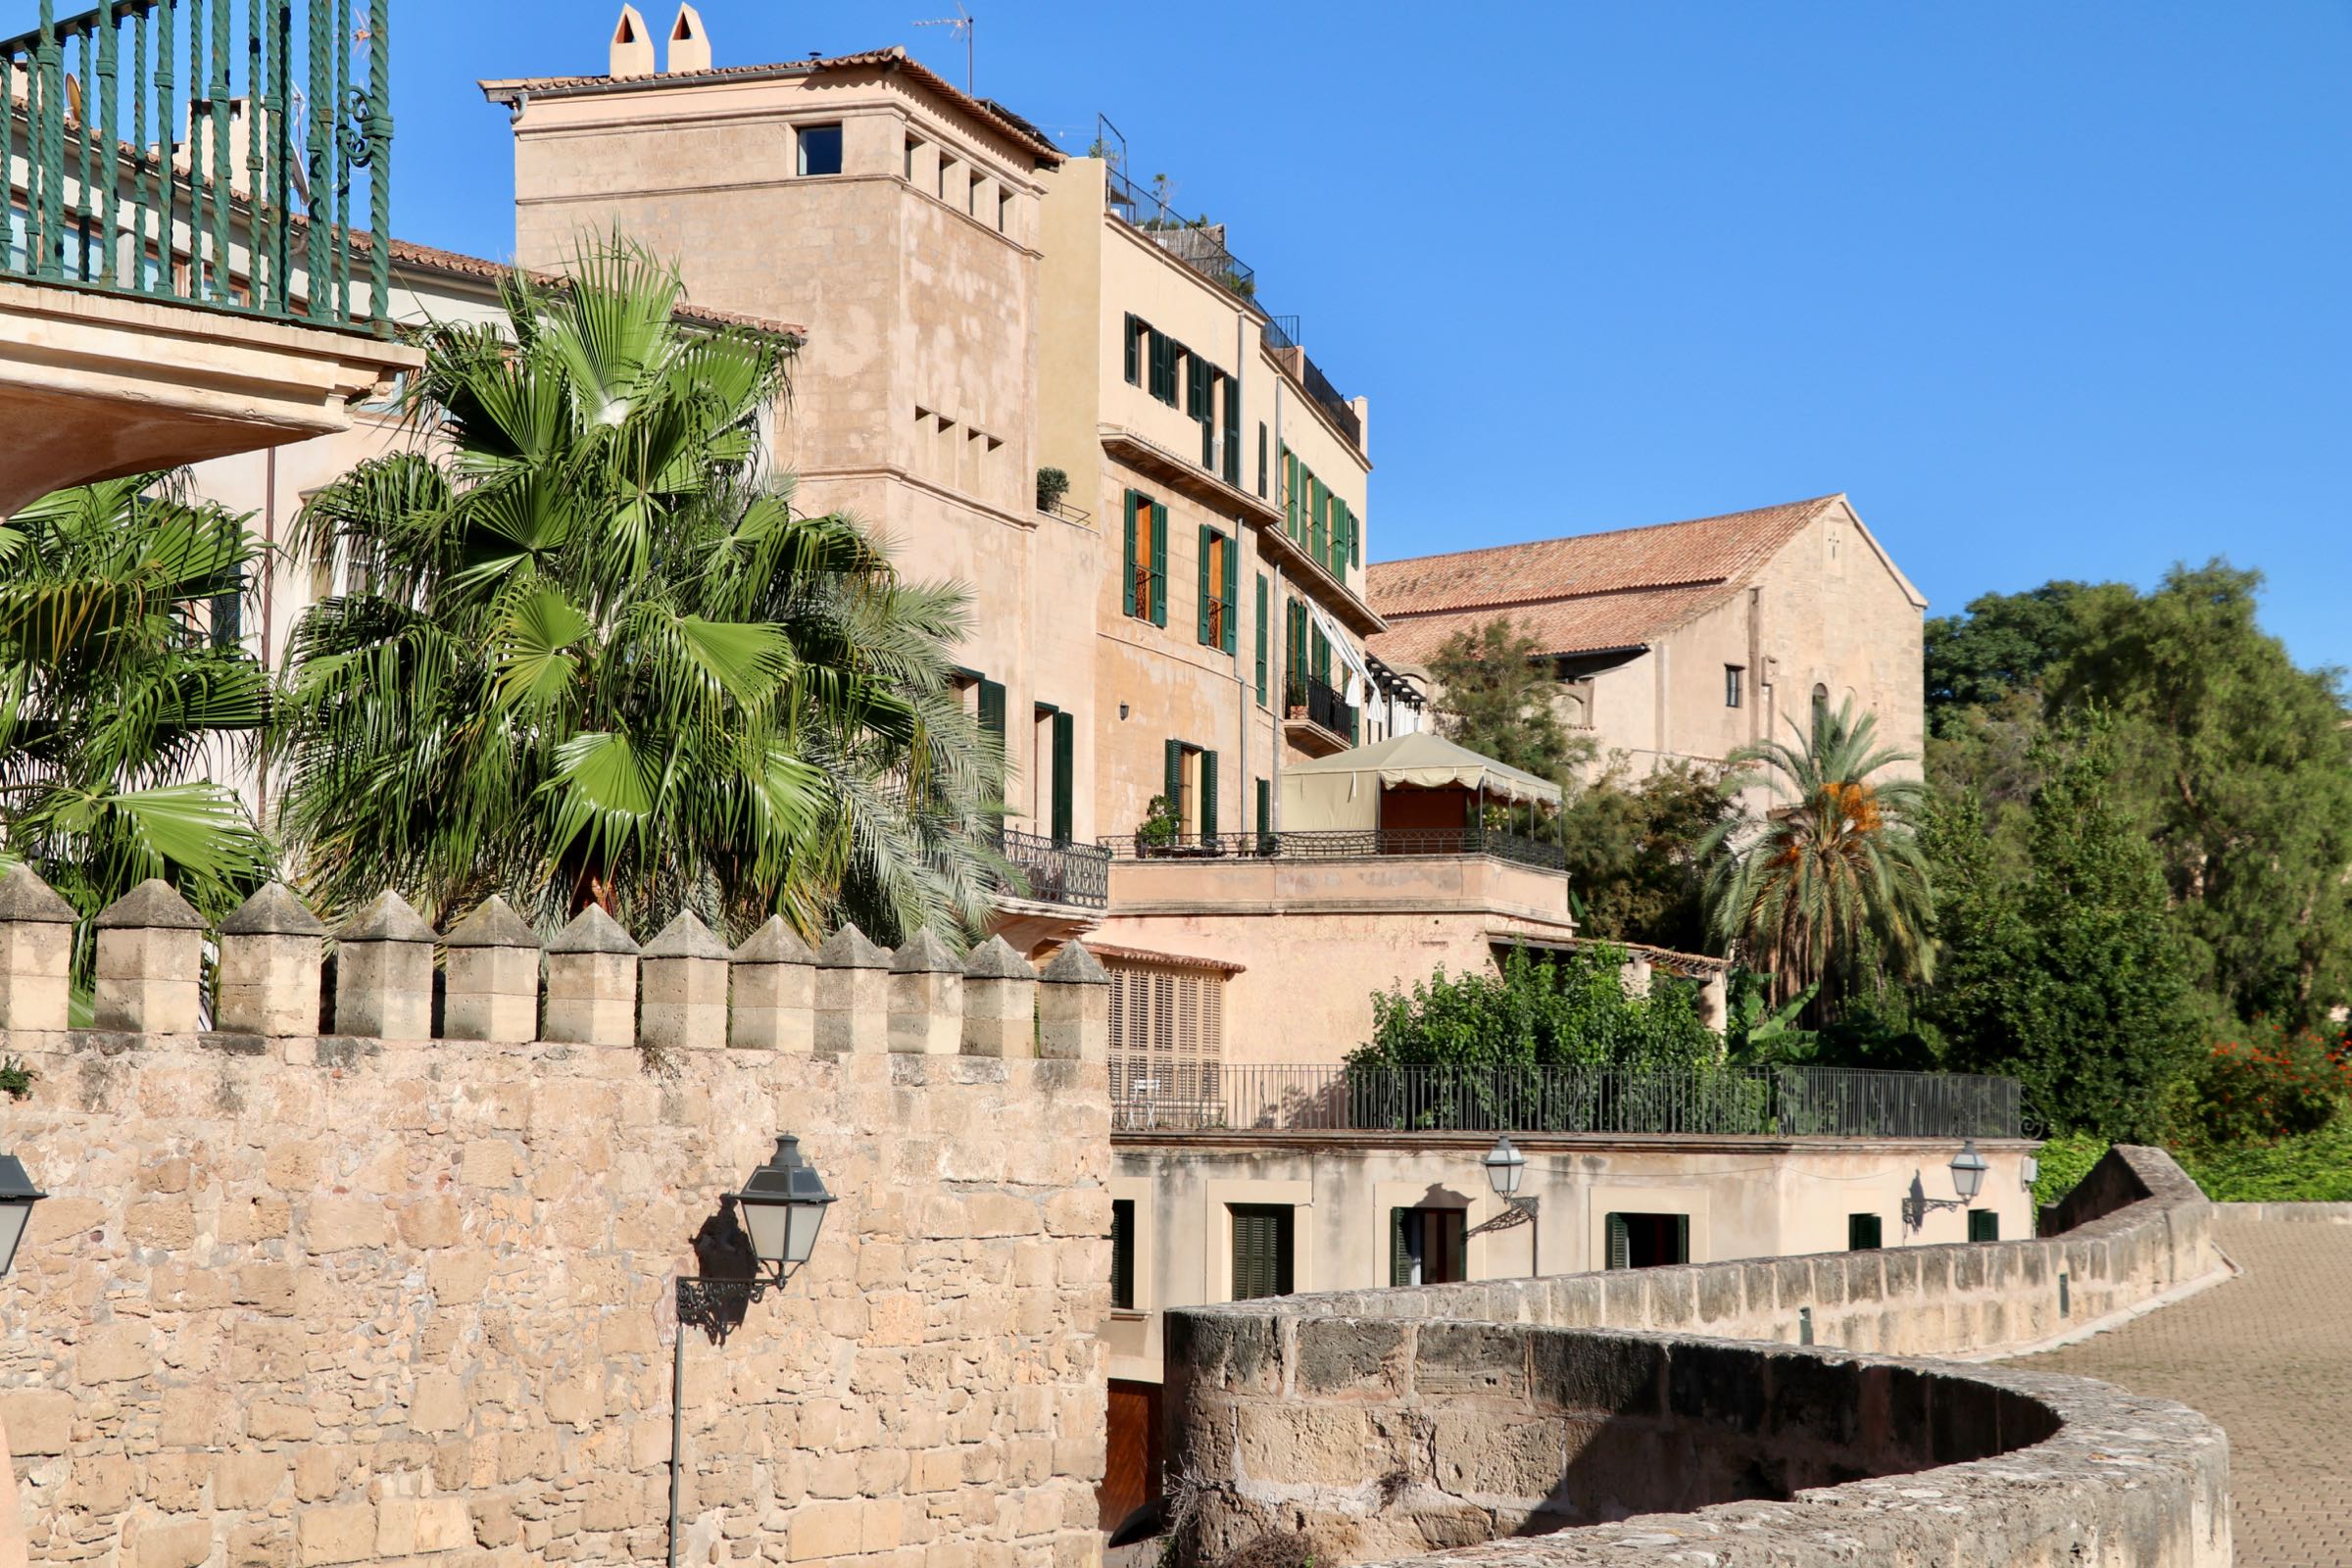 Stadtmauer von Palma de Mallorca, Spanien